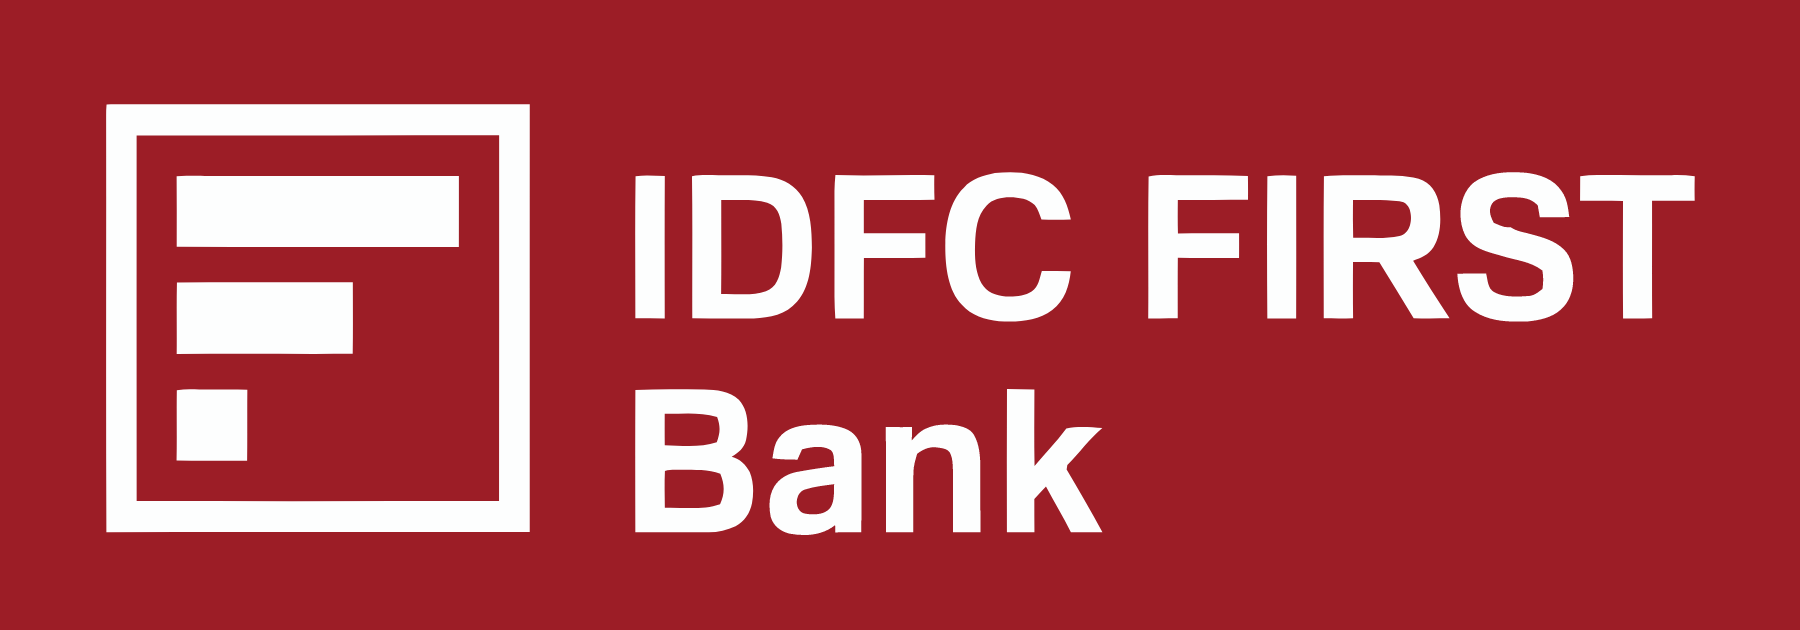 IDFC First Bank approves merger with IDFC, awaits regulatory approvals